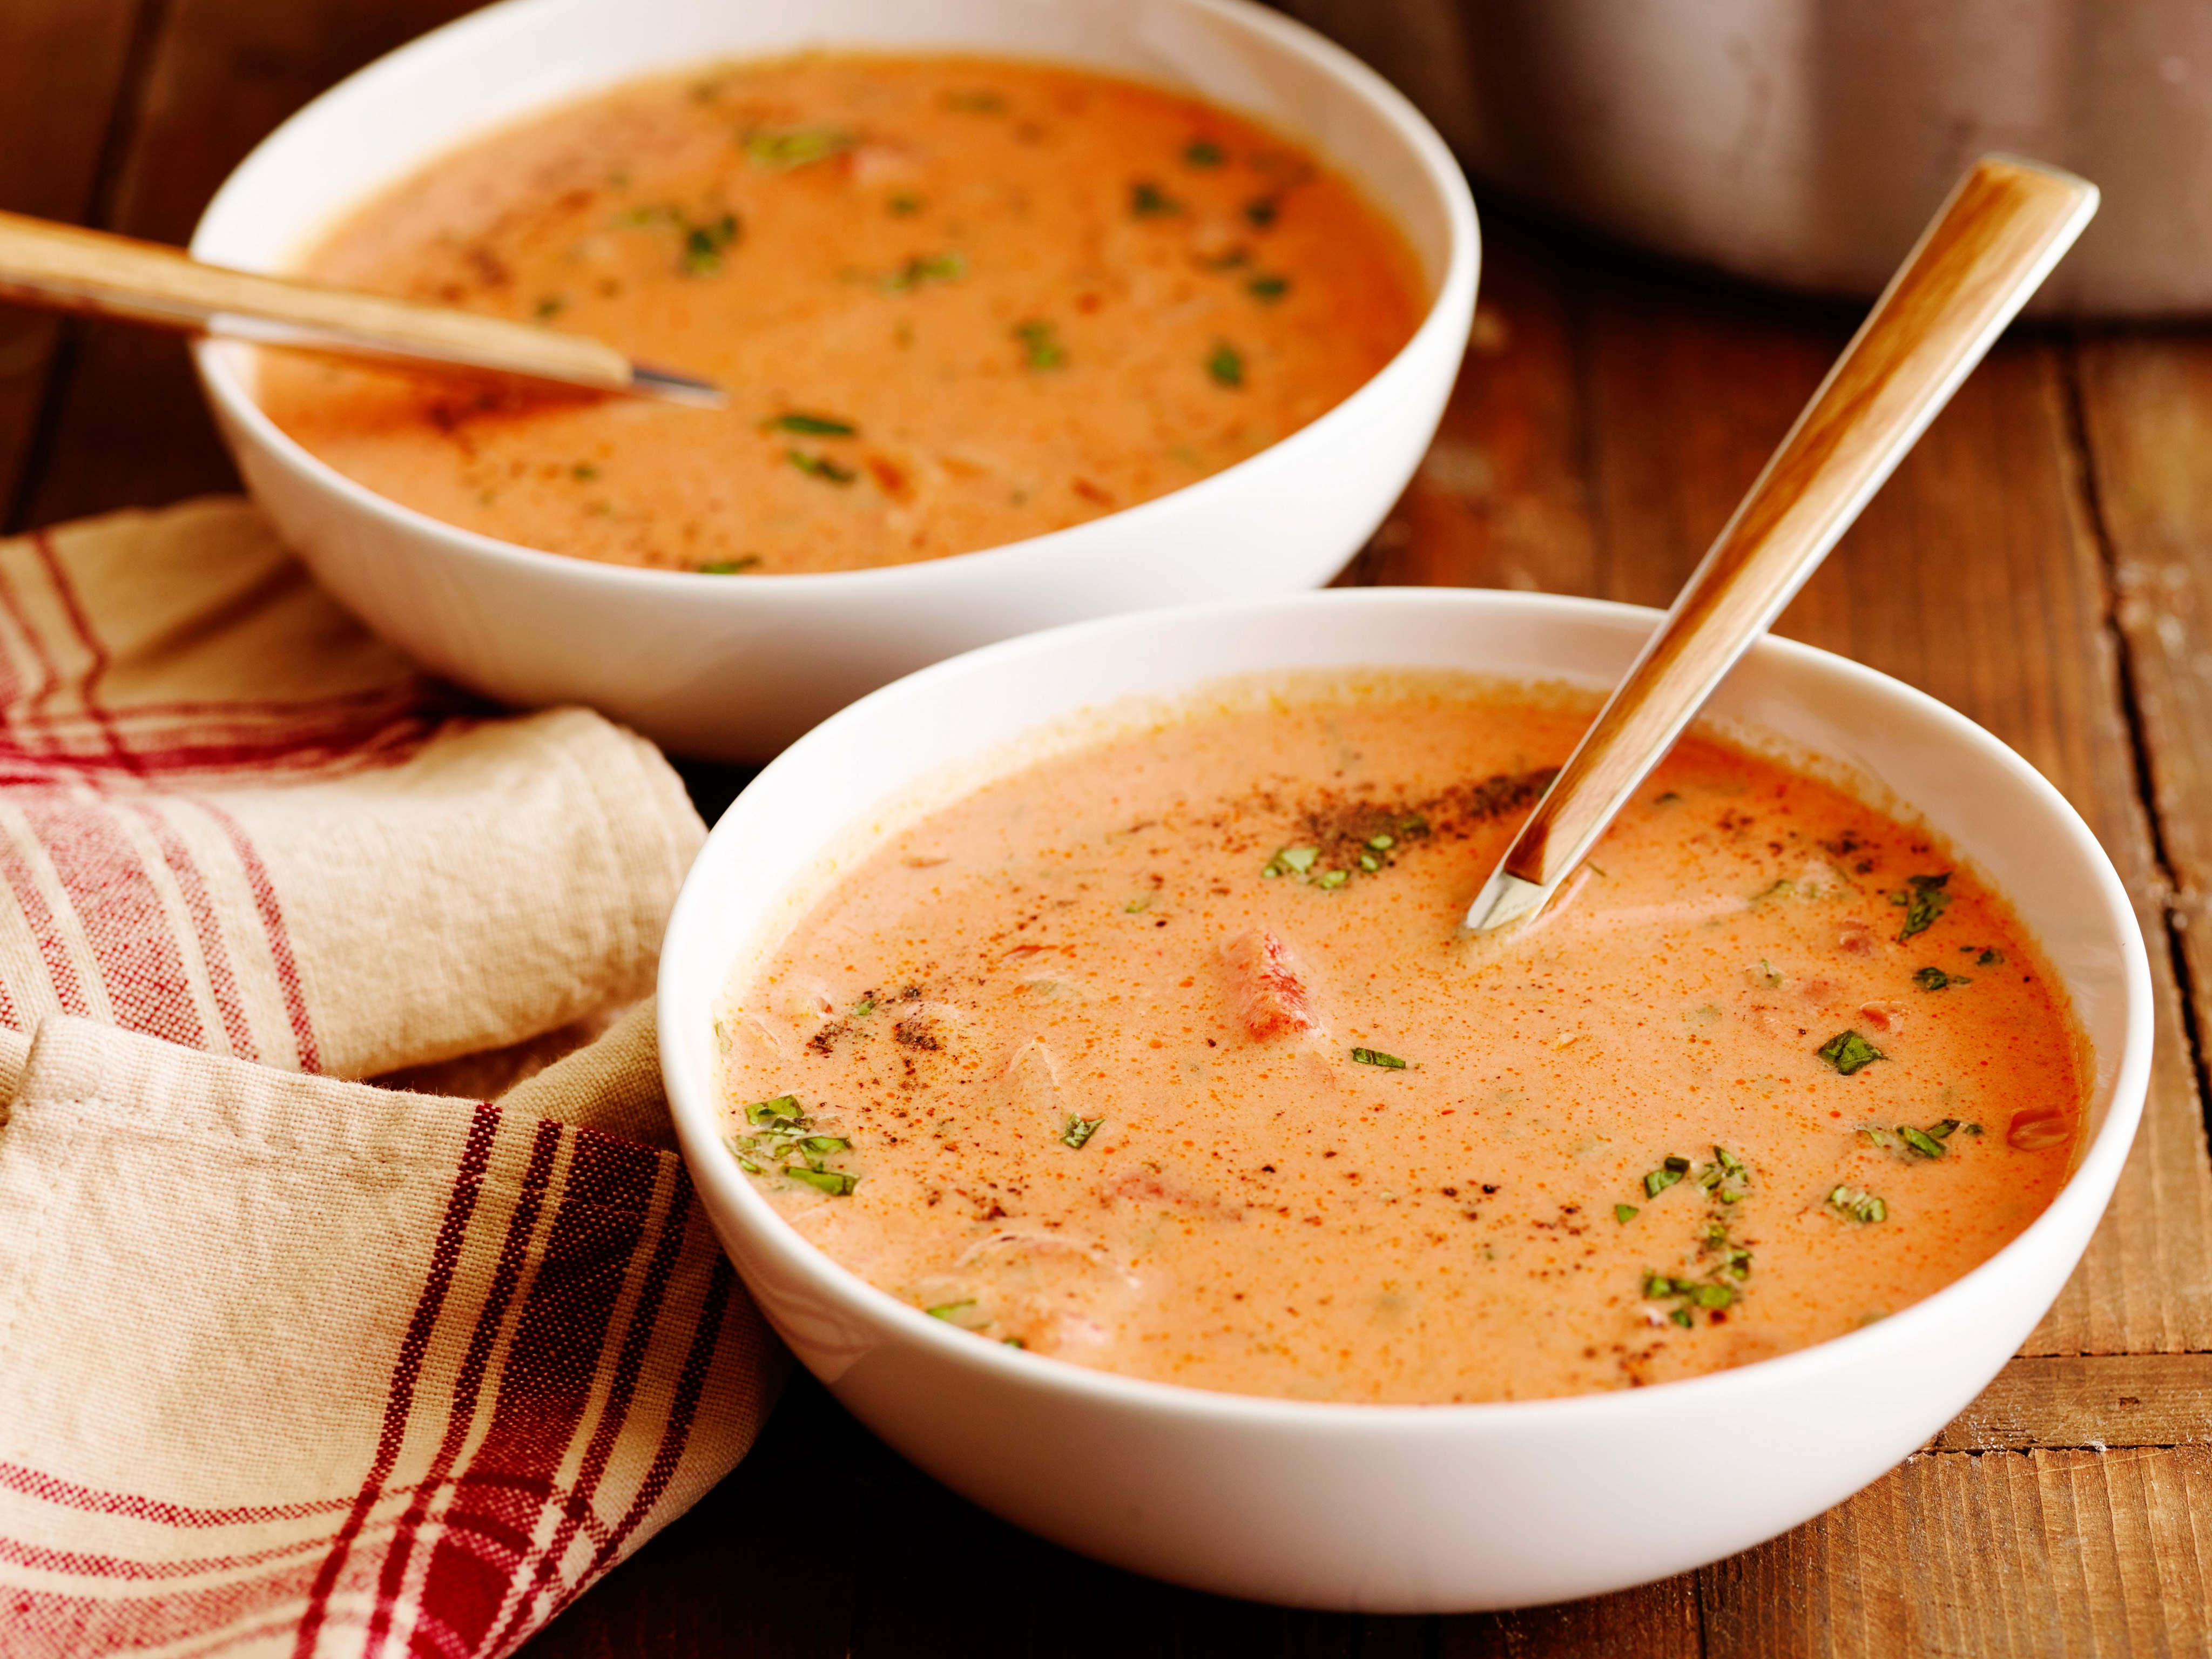 The Yellow Deli - Fresh creamy tomato basil soup. Your